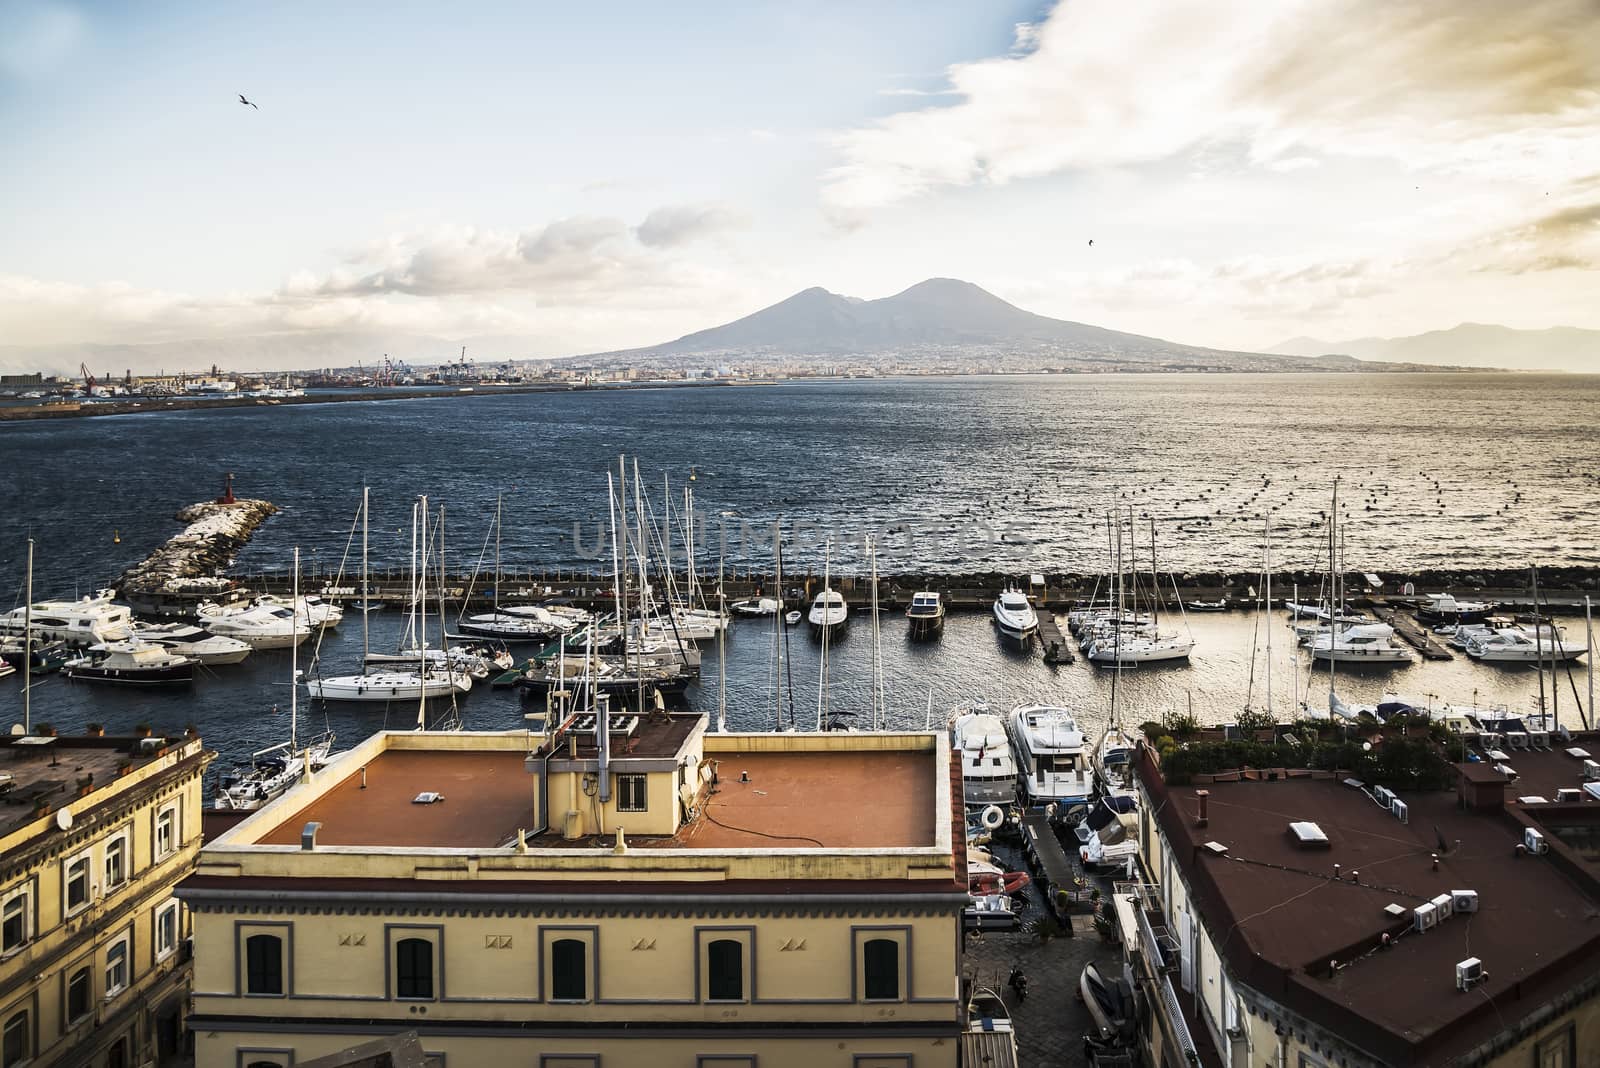 City of Naples by edella